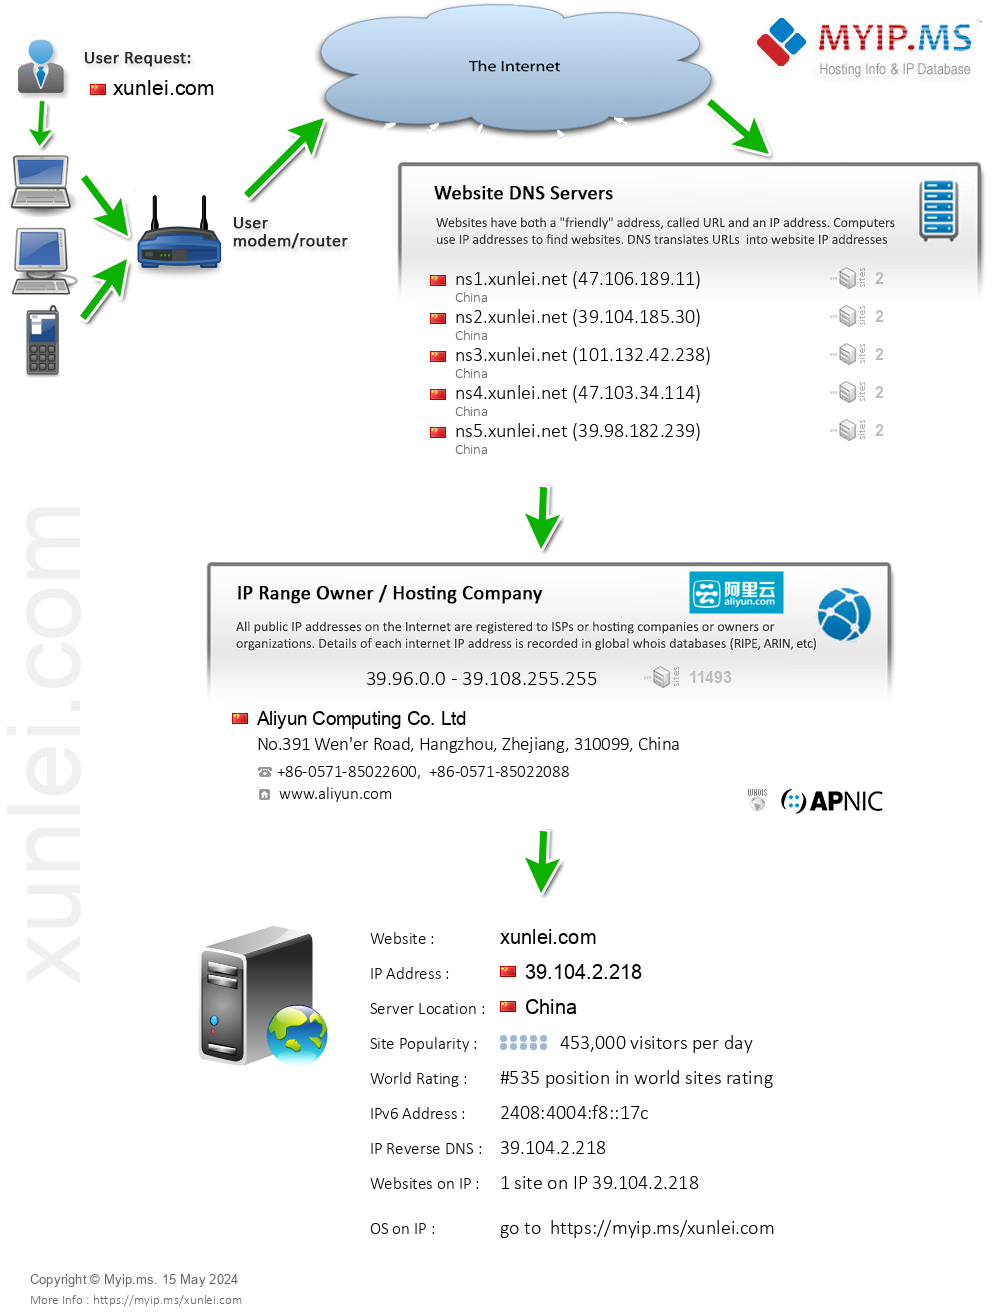 Xunlei.com - Website Hosting Visual IP Diagram